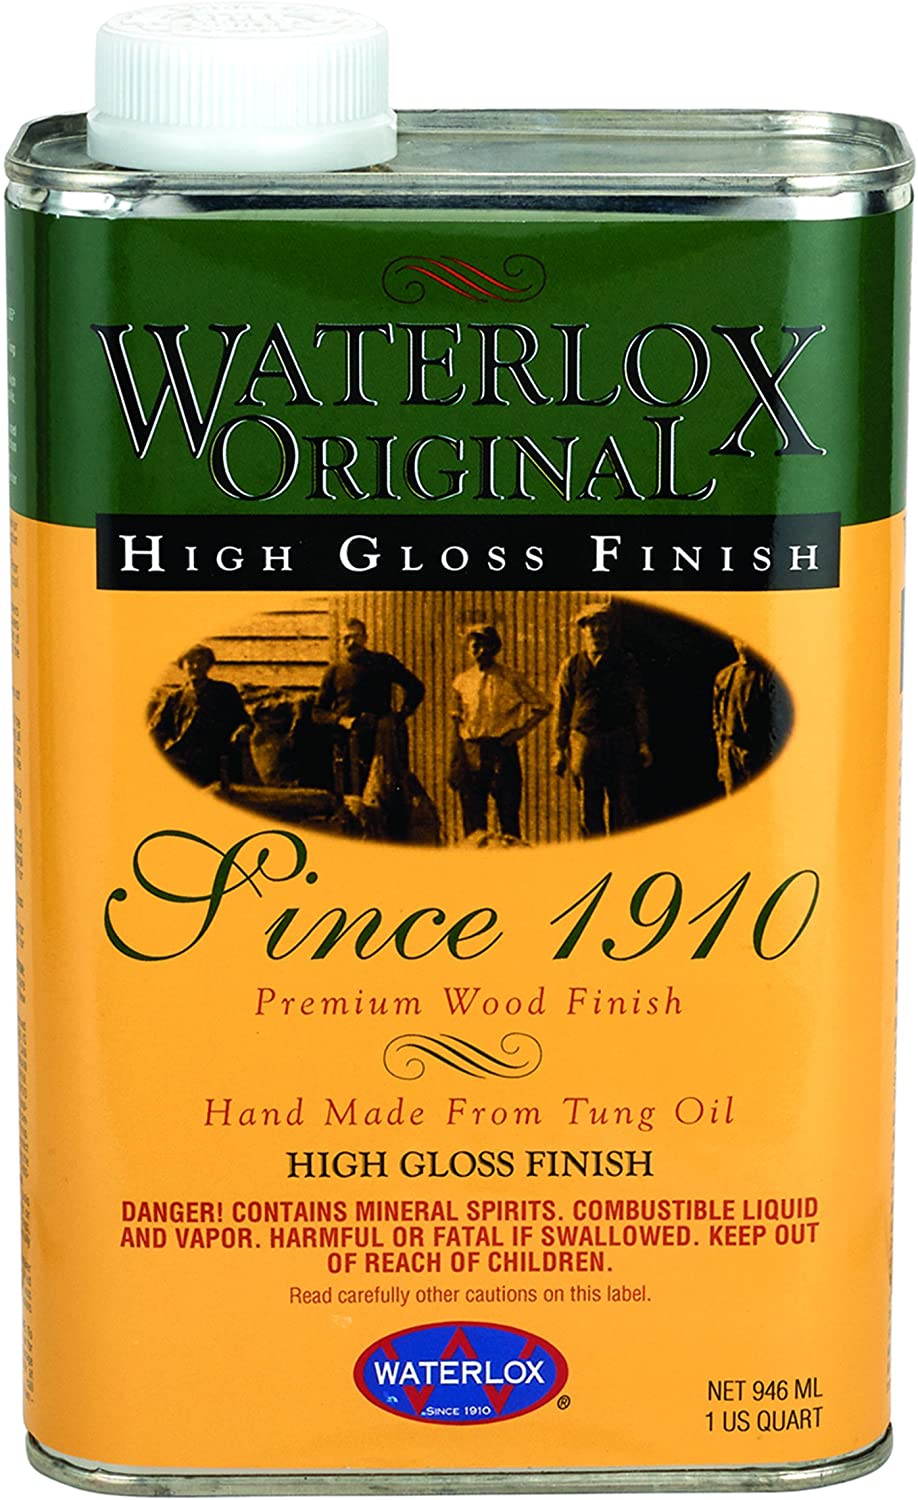 Waterlox - Original Formula